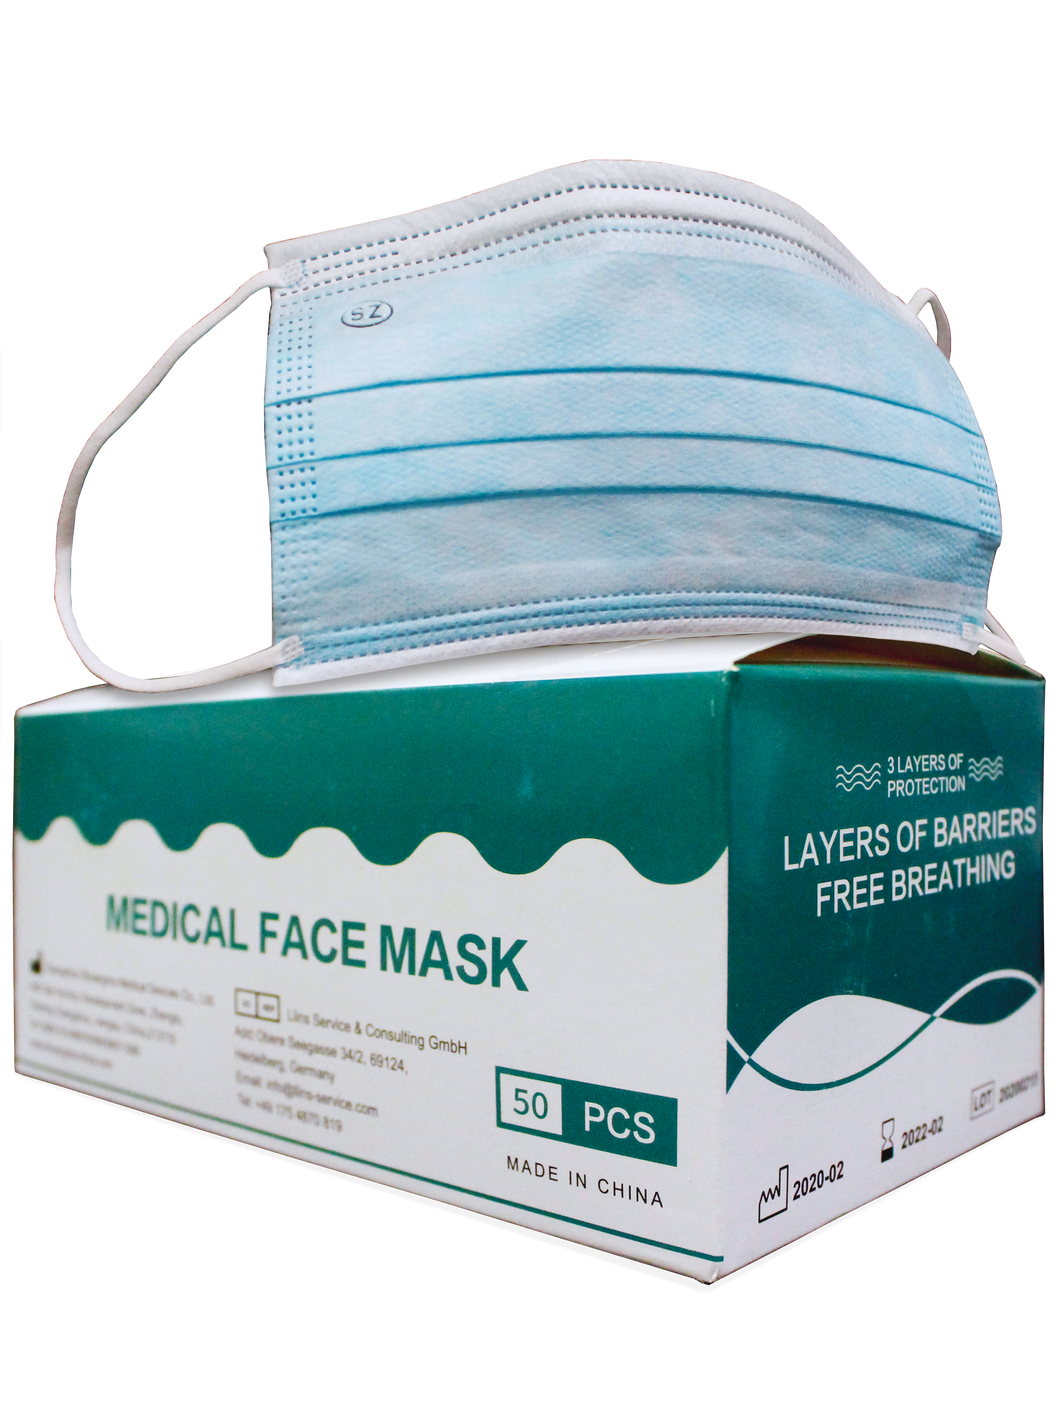 Box of 50 Medical Face Masks -AGTV-